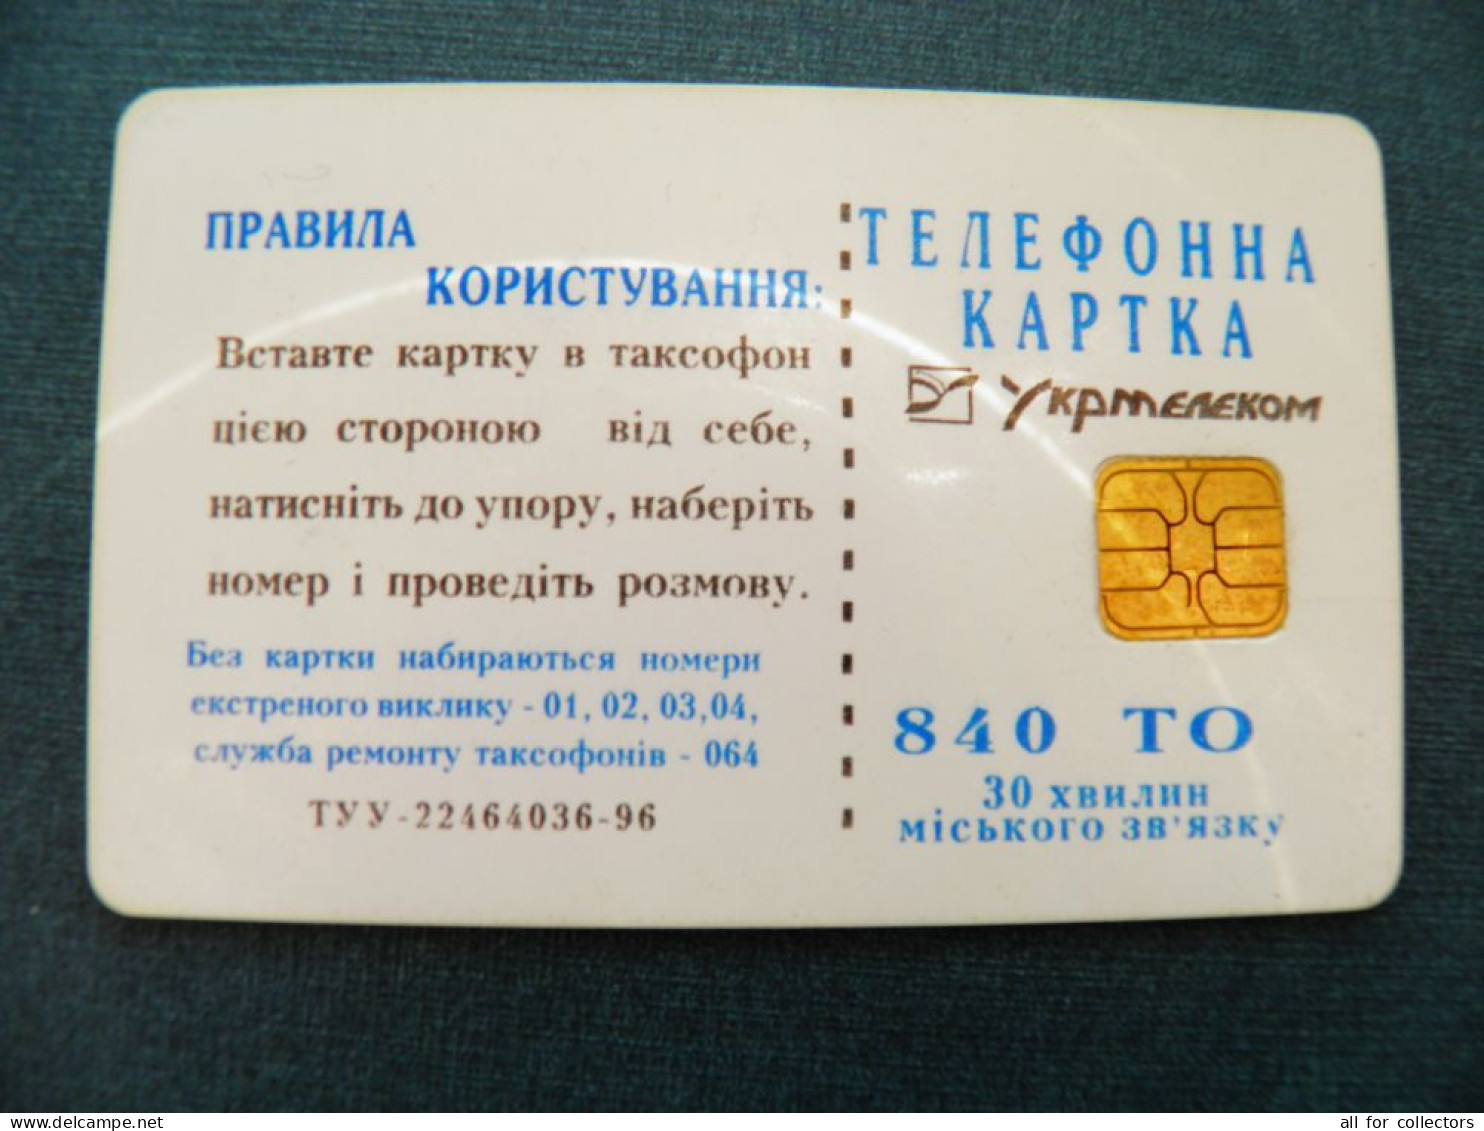 Phonecard Chip Animals Insects Butterfly Papillon Summer 97  K26 07/97 25,000ex. 840 Units  UKRAINE - Oekraïne